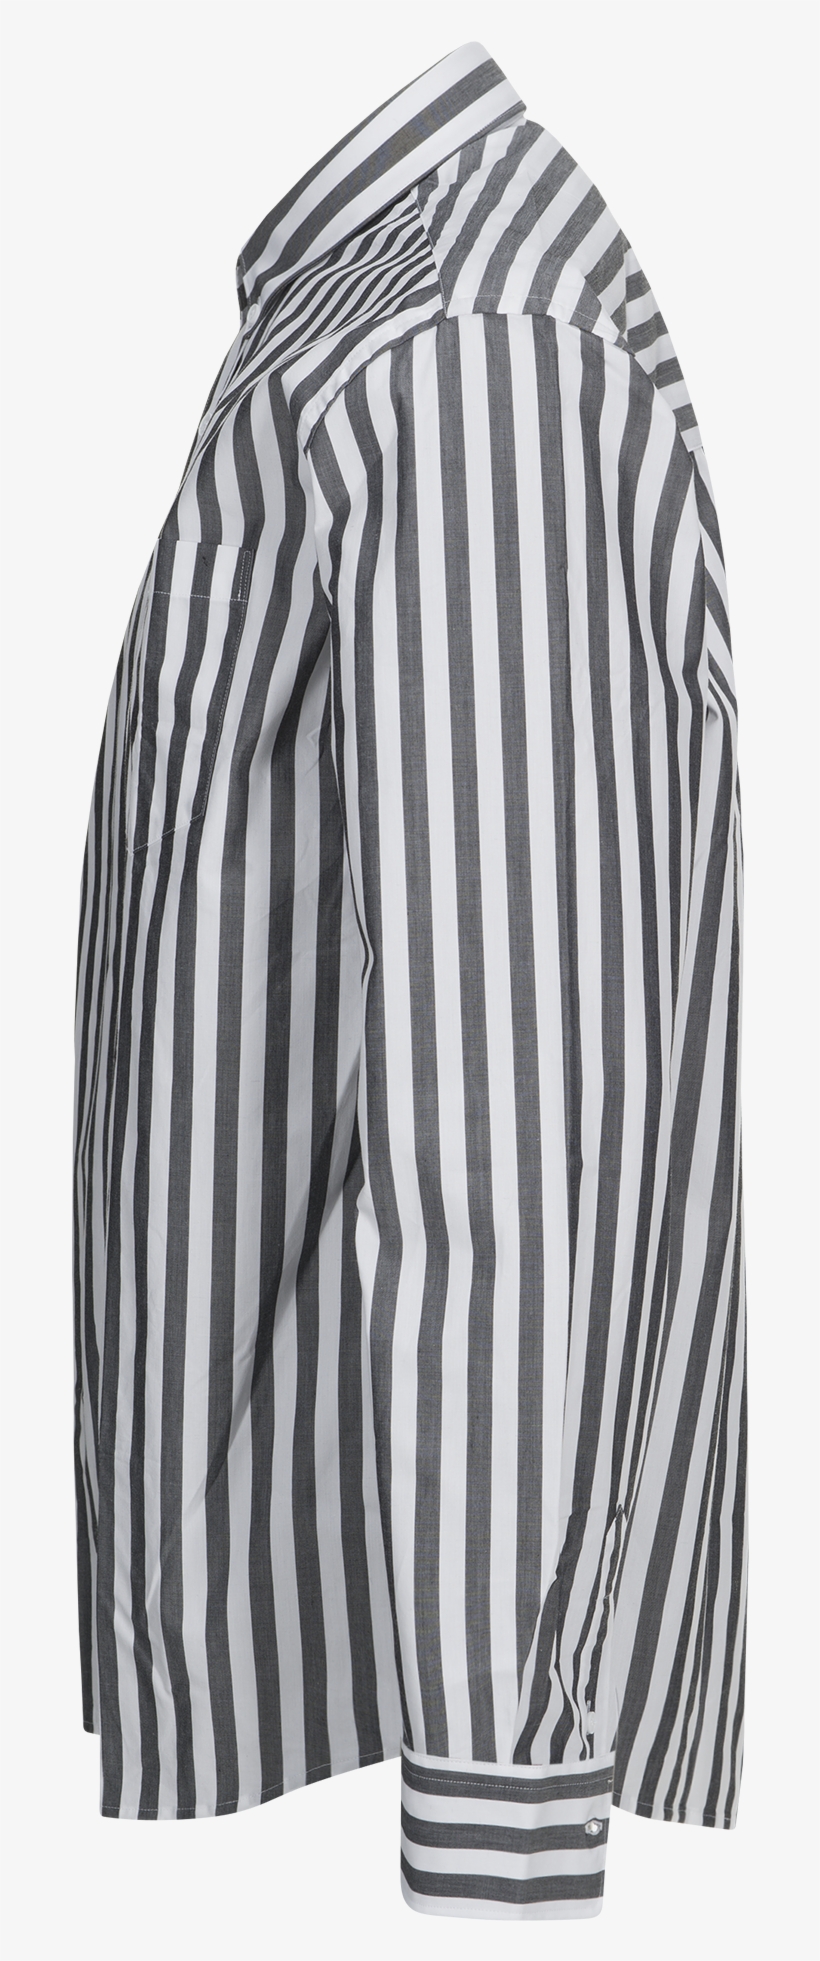 Men's Steve Striped Shirt Pattern, transparent png #6564871